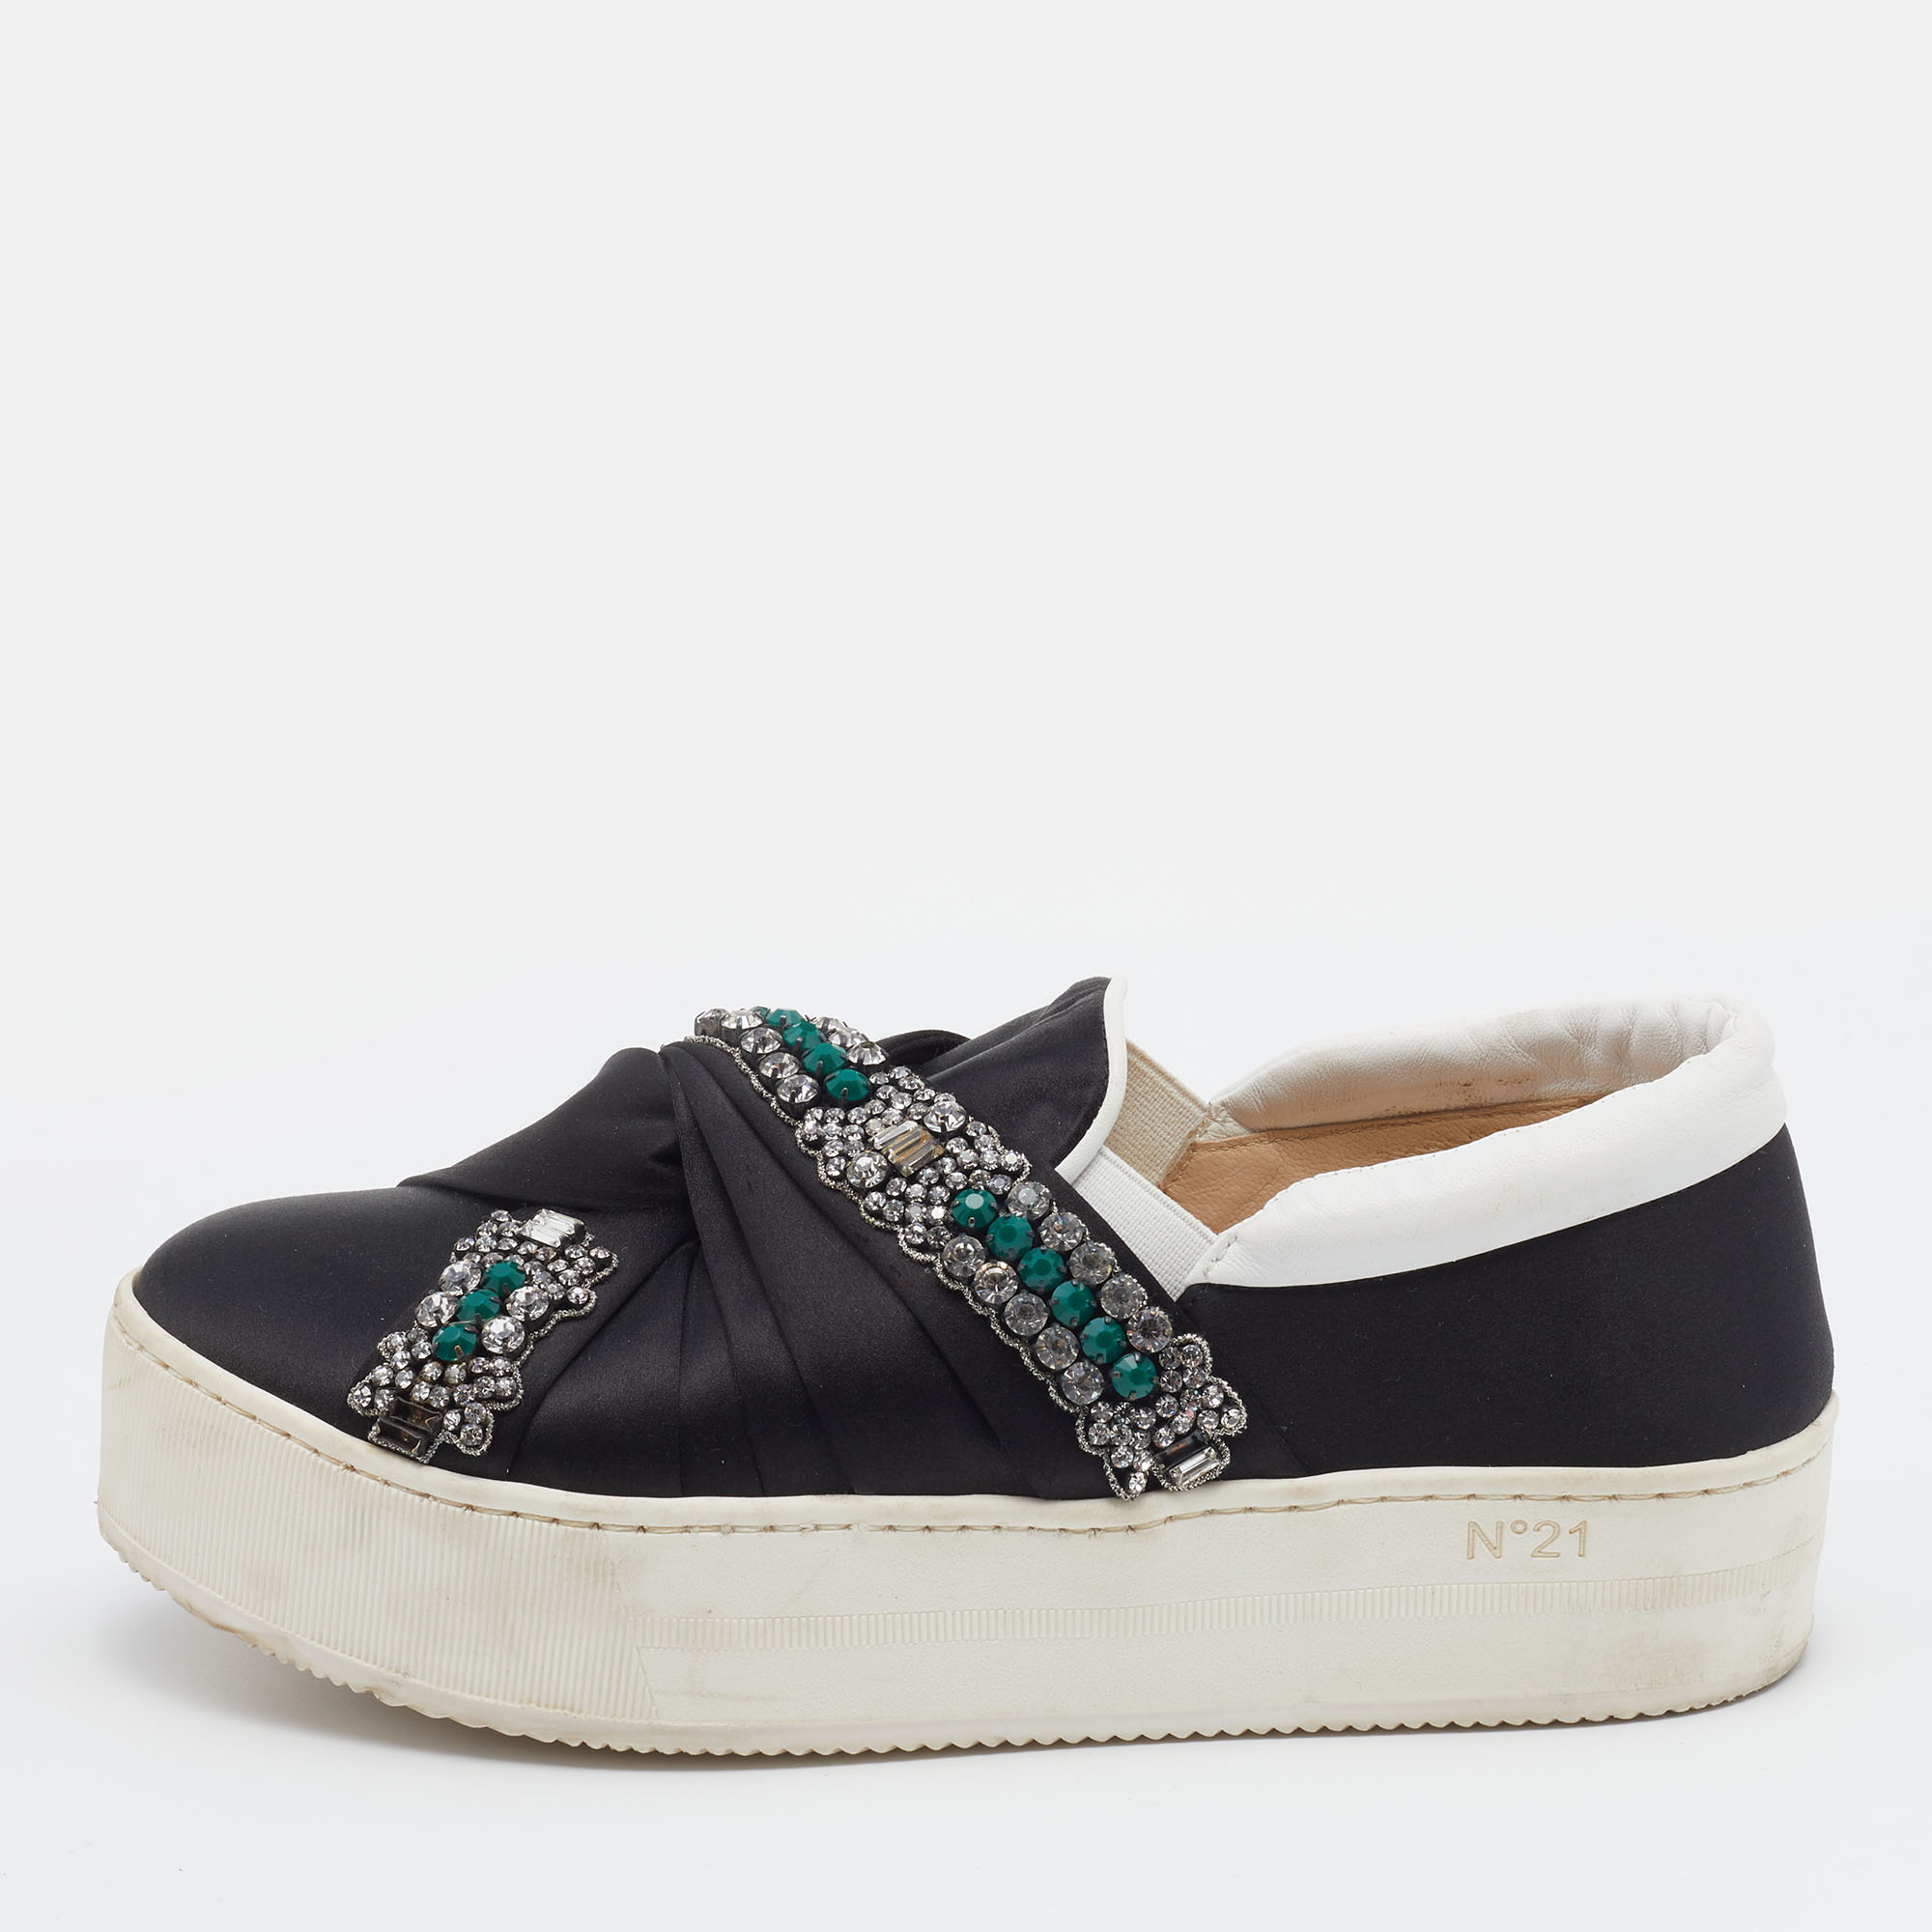 N21 black/white satin and leather crystal embellished platform slip on sneakers size 37